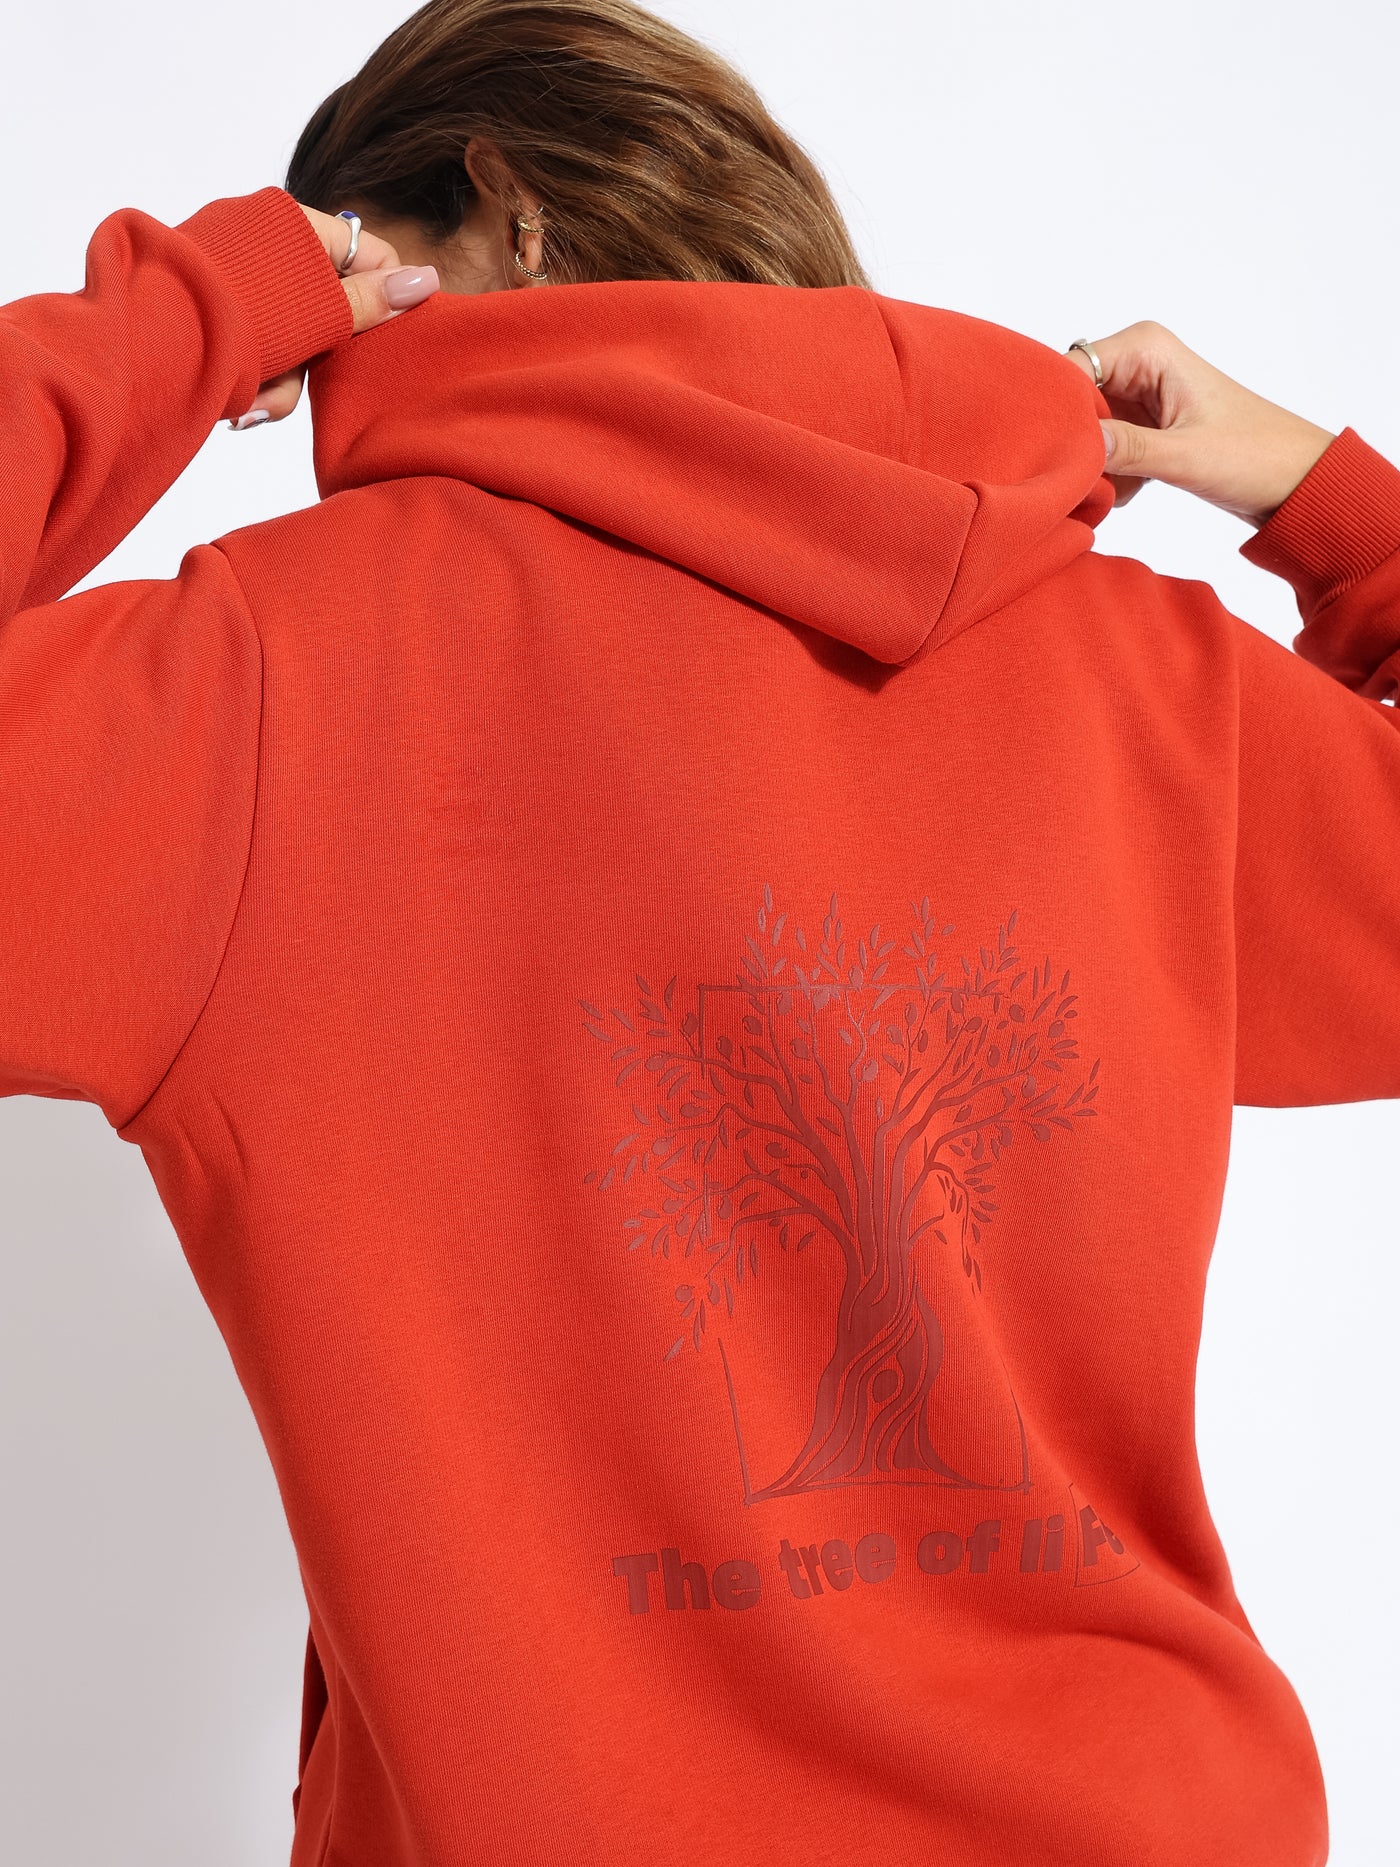 Hoodie - Kangaroo Pocket - "The Tree of Life" Back Print